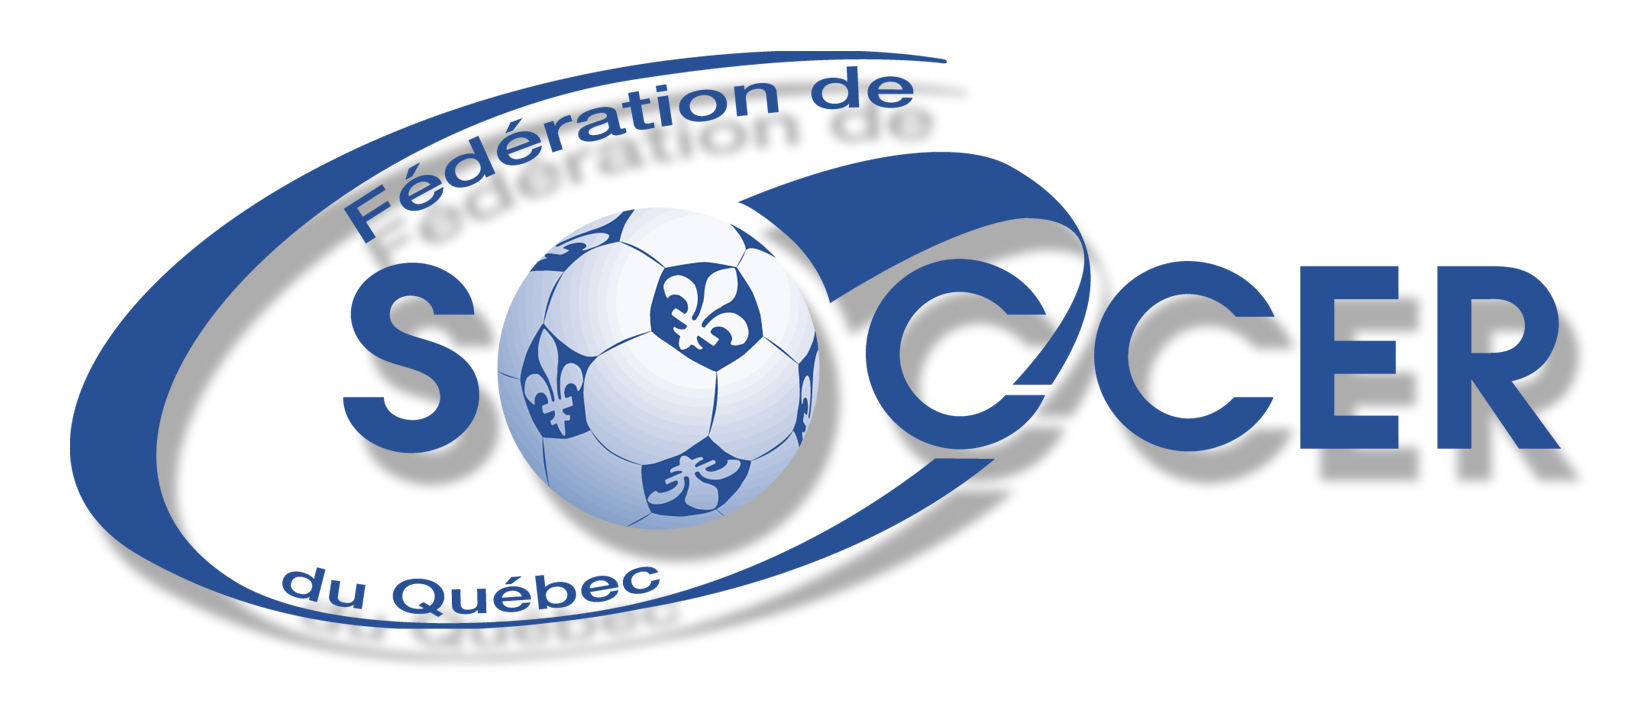 Quebec Fed Logo